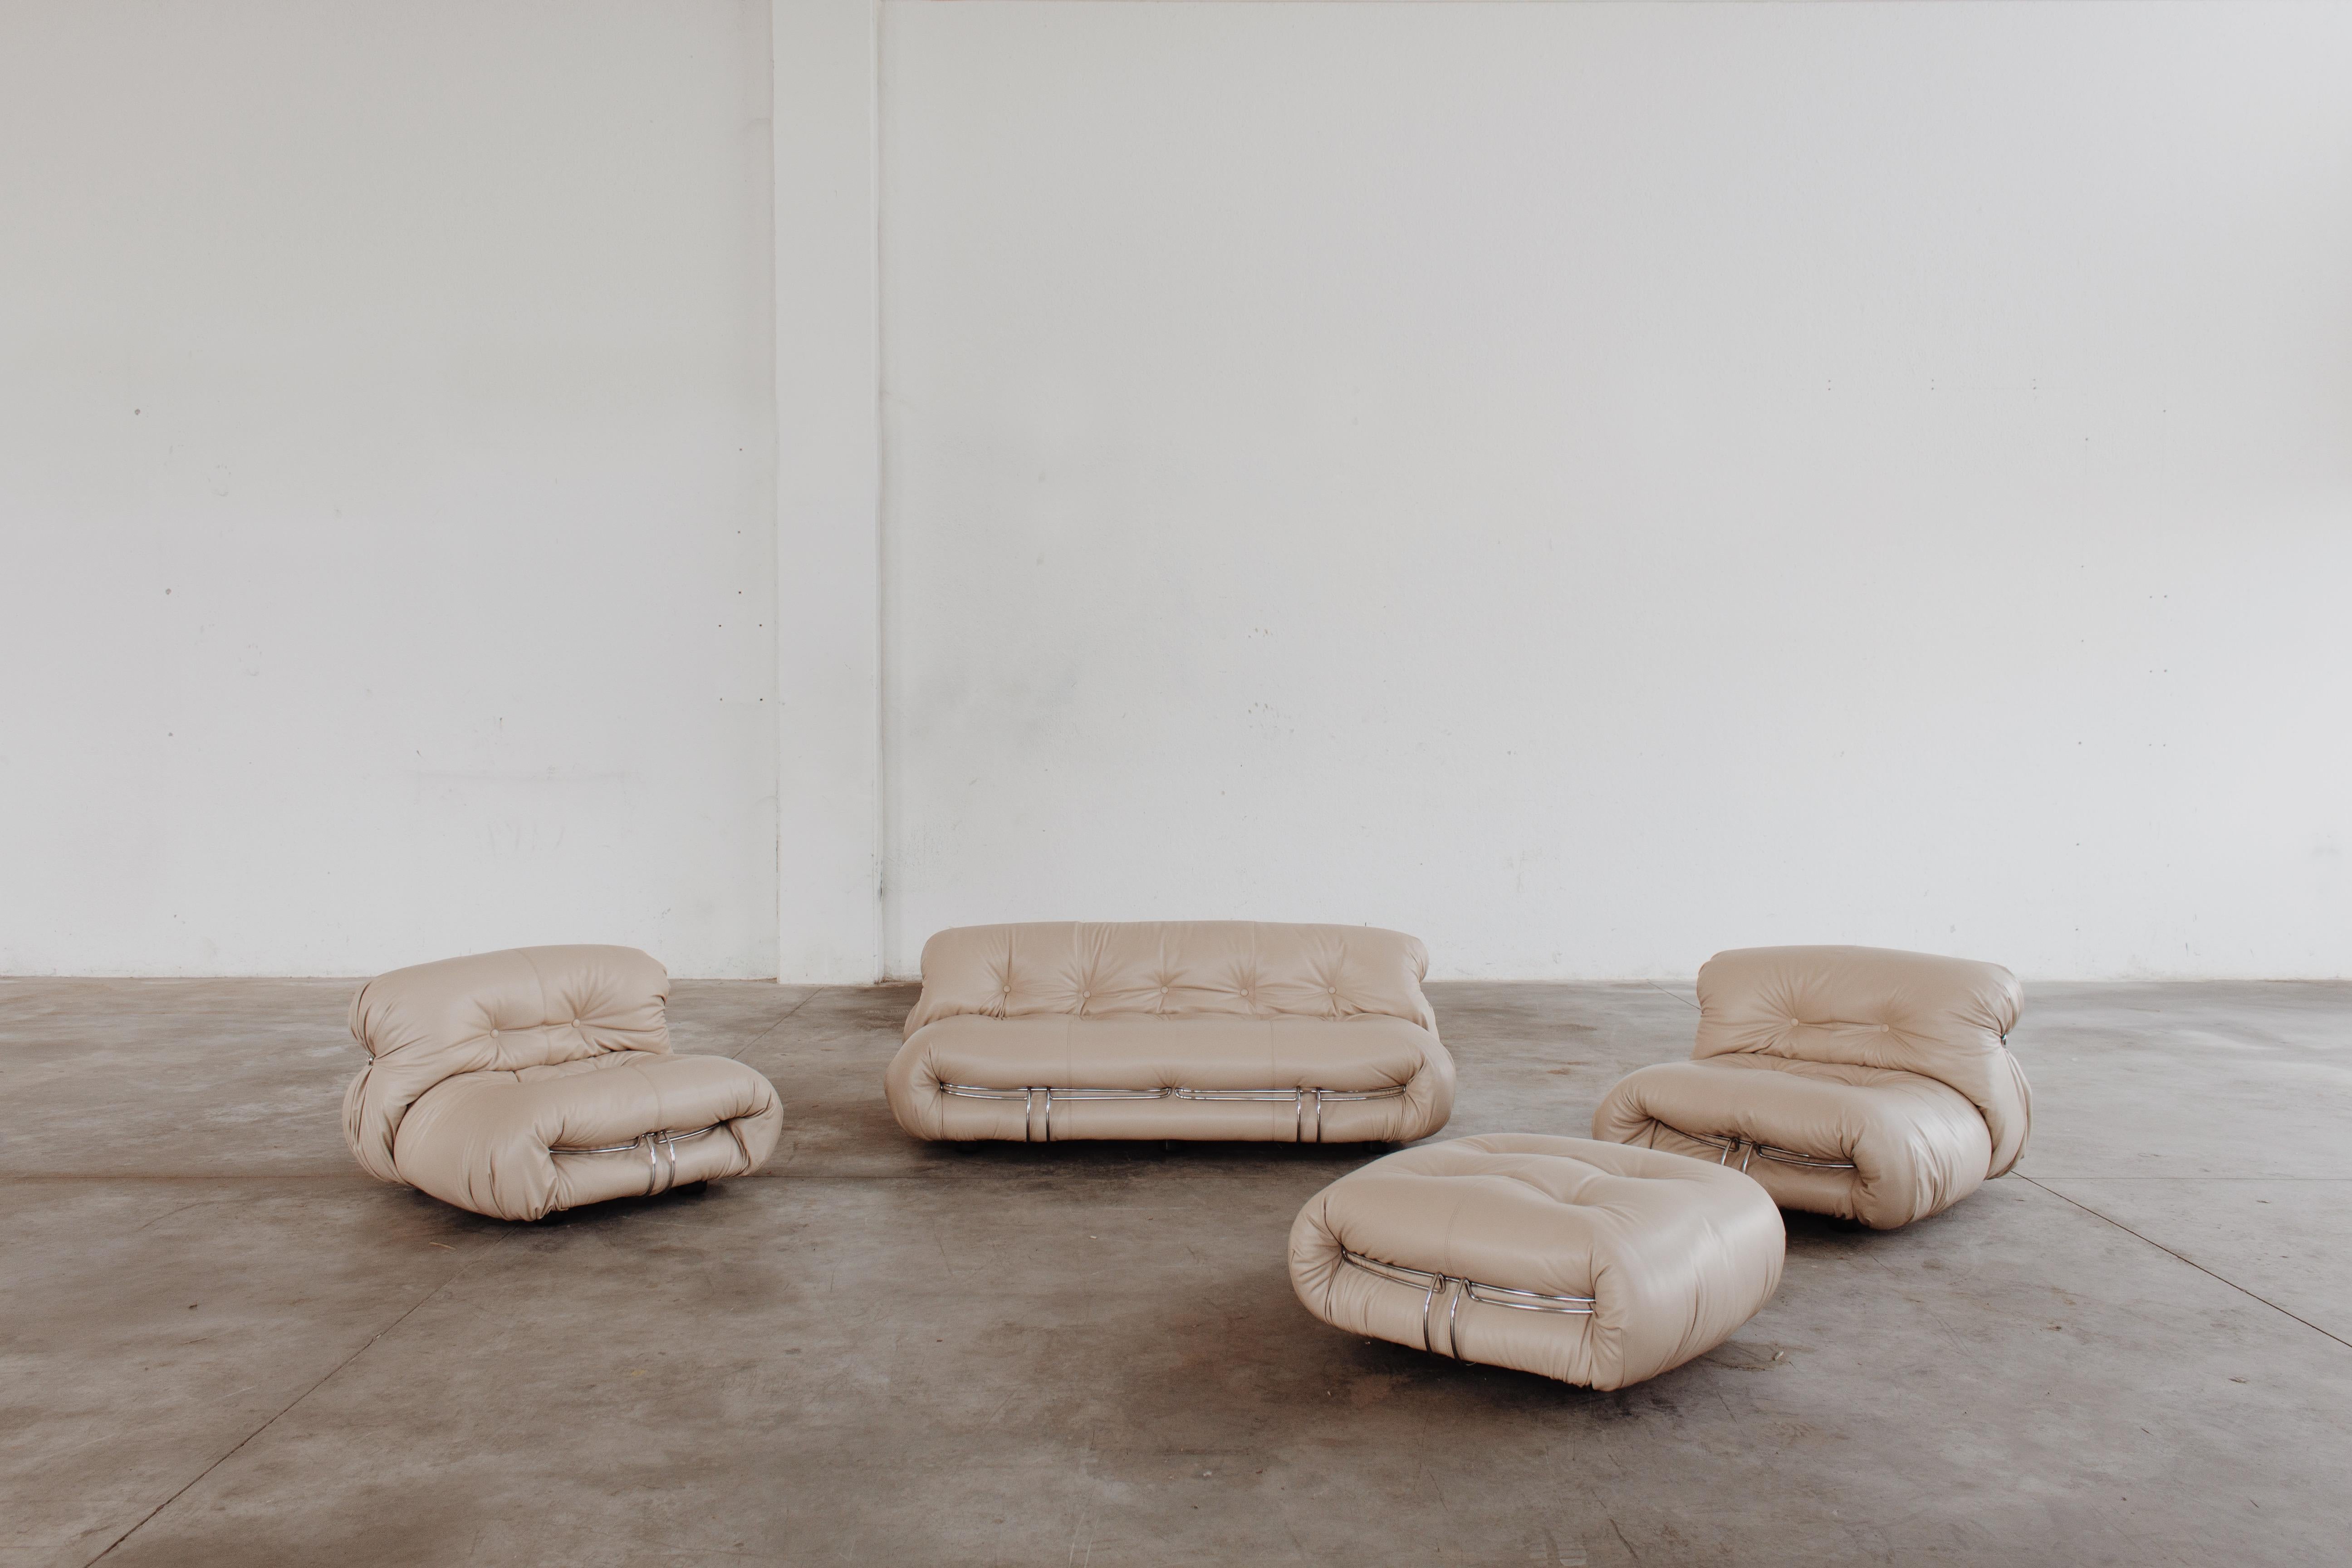 Leather Afra & Tobia Scarpa “Soriana” Living Room Set for Cassina, 1969 For Sale